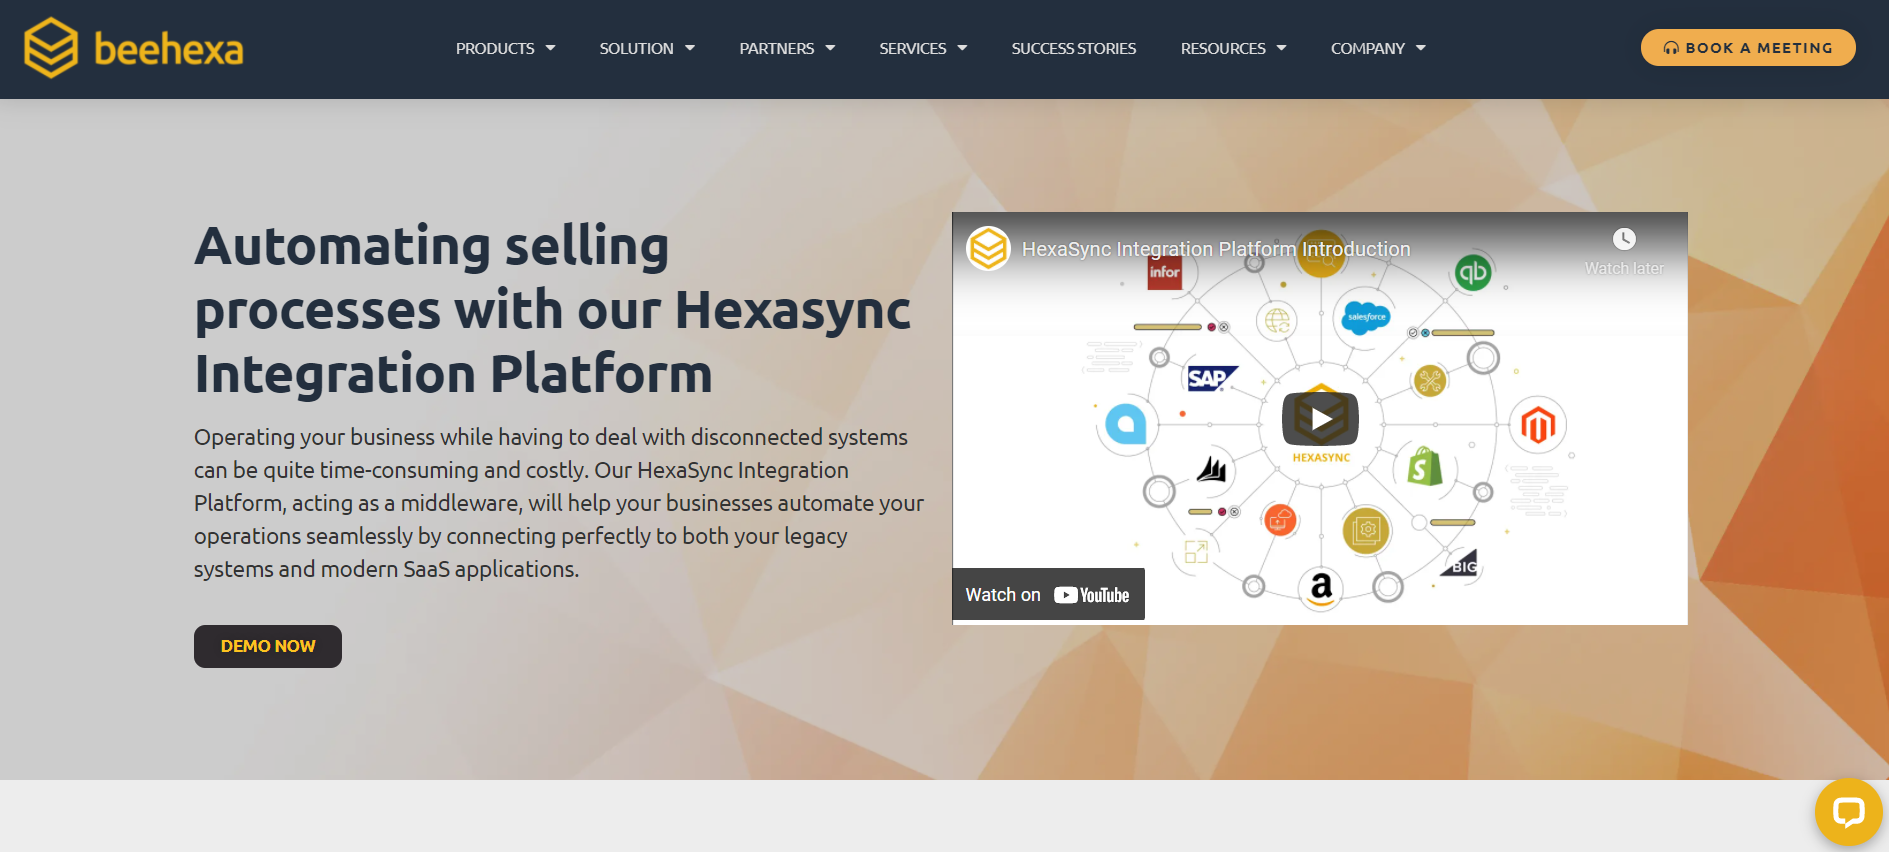 Hexasync integration platform